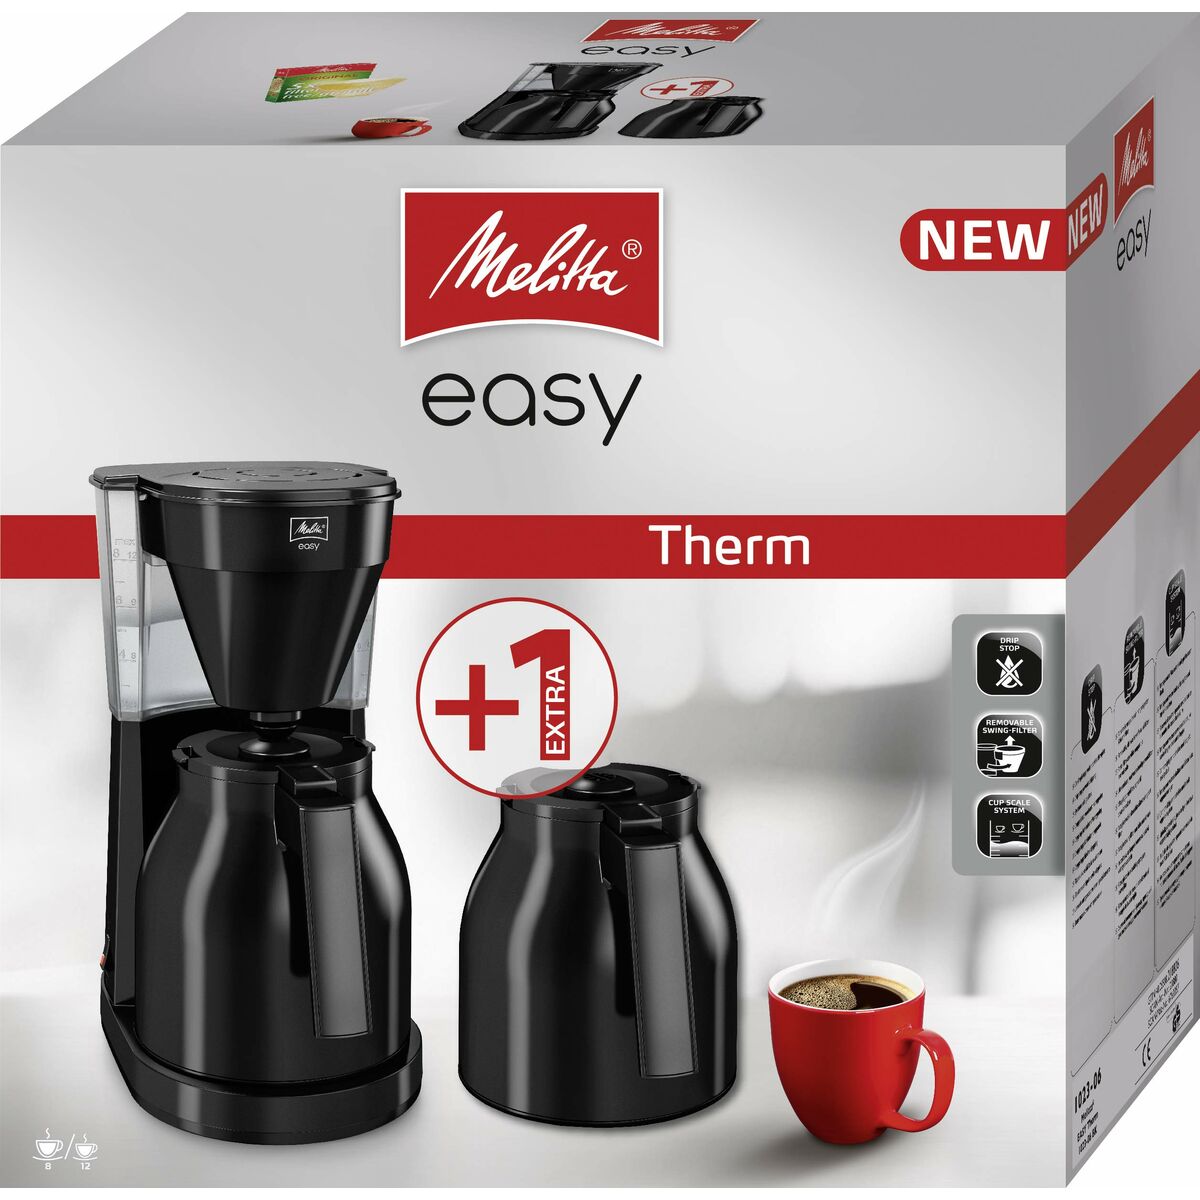 Filterkaffeemaschine Melitta Easy Therm II Schwarz 1050 W 1 L - CA International 